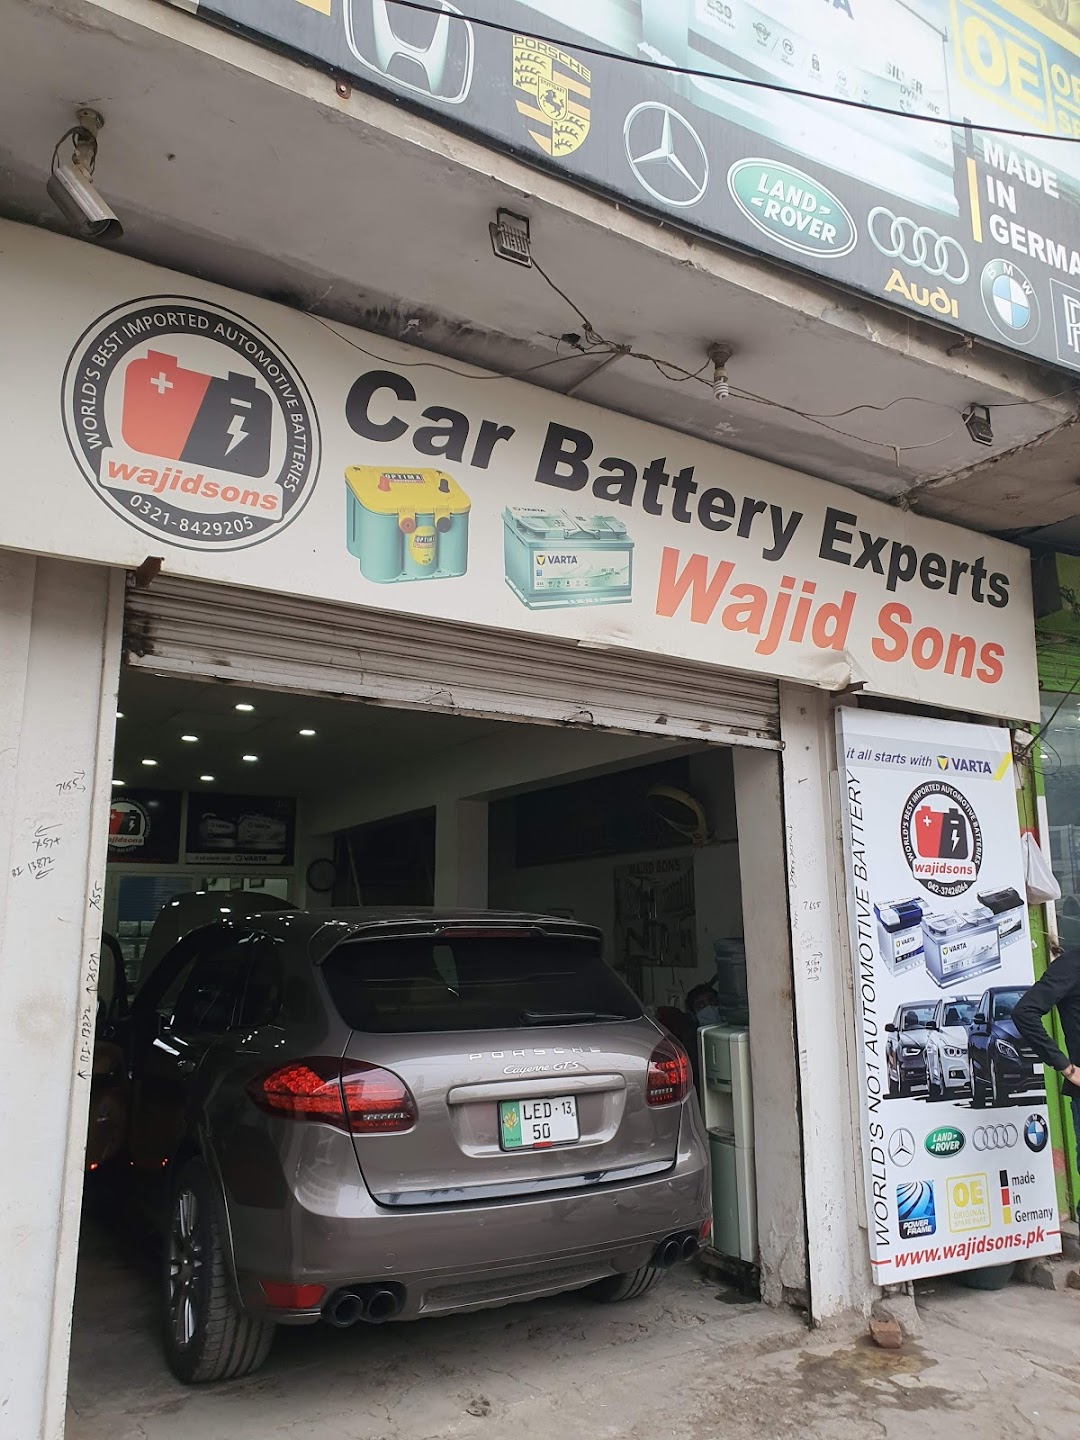 Wajid Sons Car Battery Experts